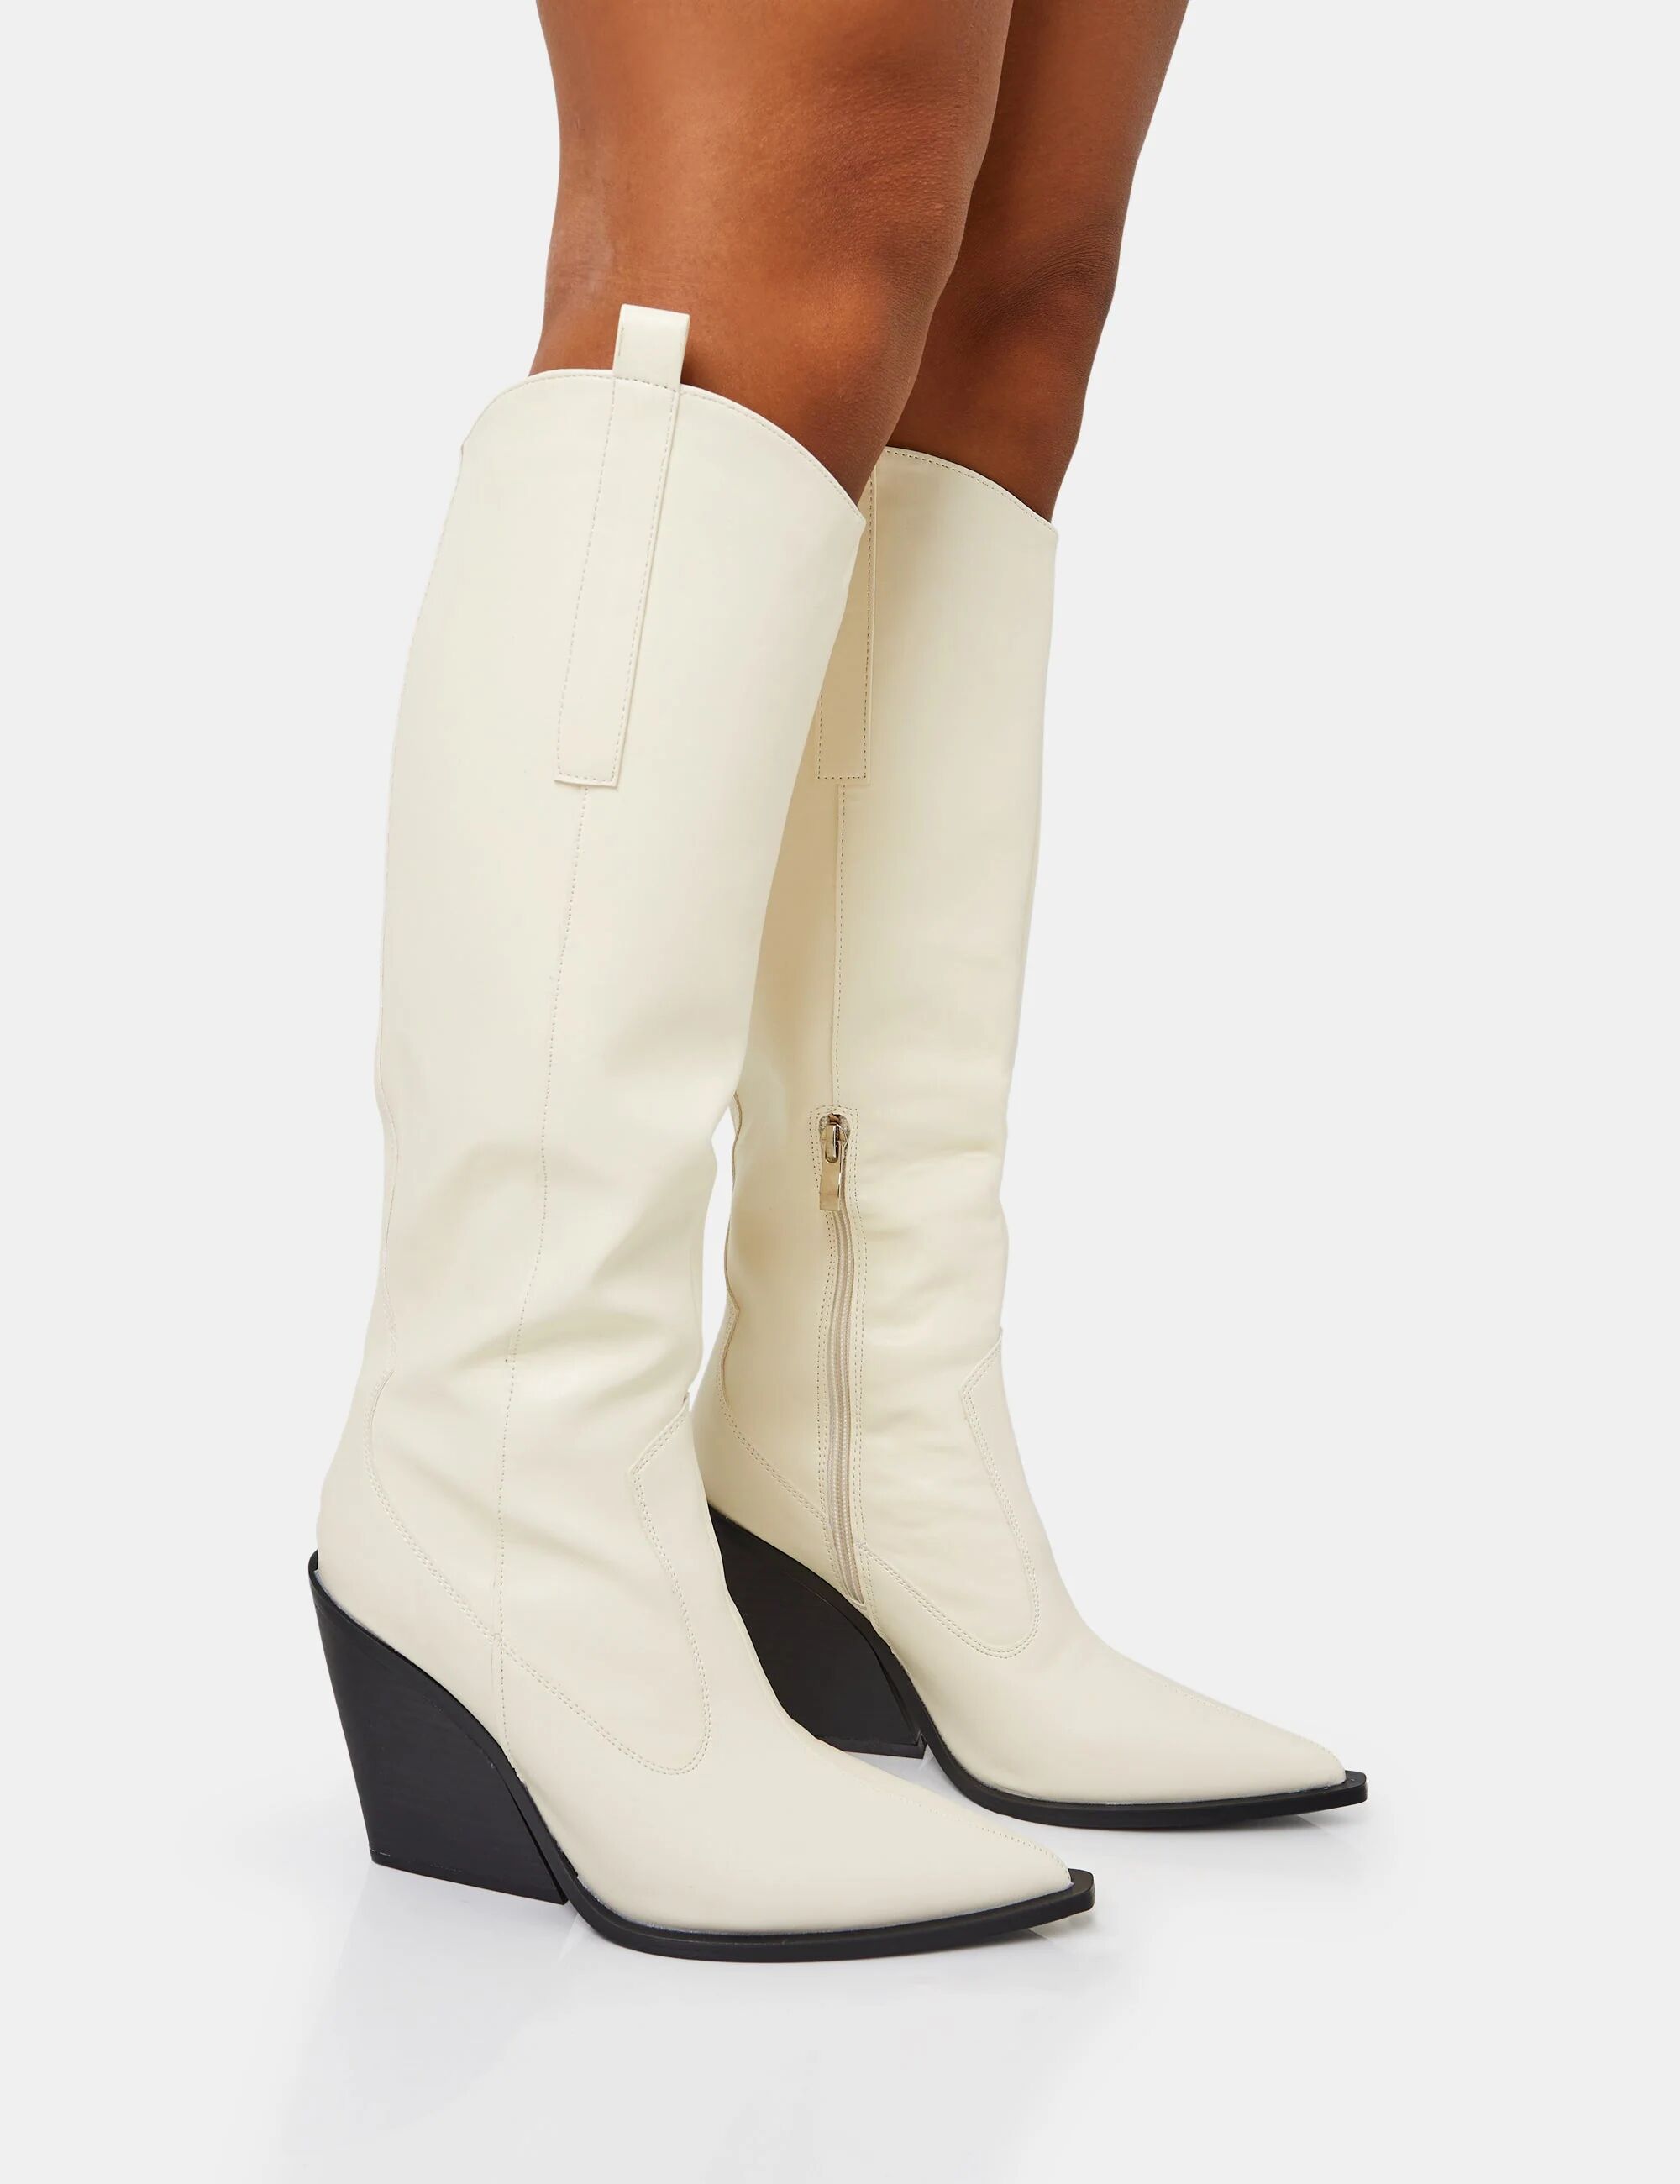 Public Desire US Nevada Ecru Western Cowboy Pointed Toe Block Heel Knee High Boots - female - US 10 / UK 8 / EU 41 - Size: 7951605235843